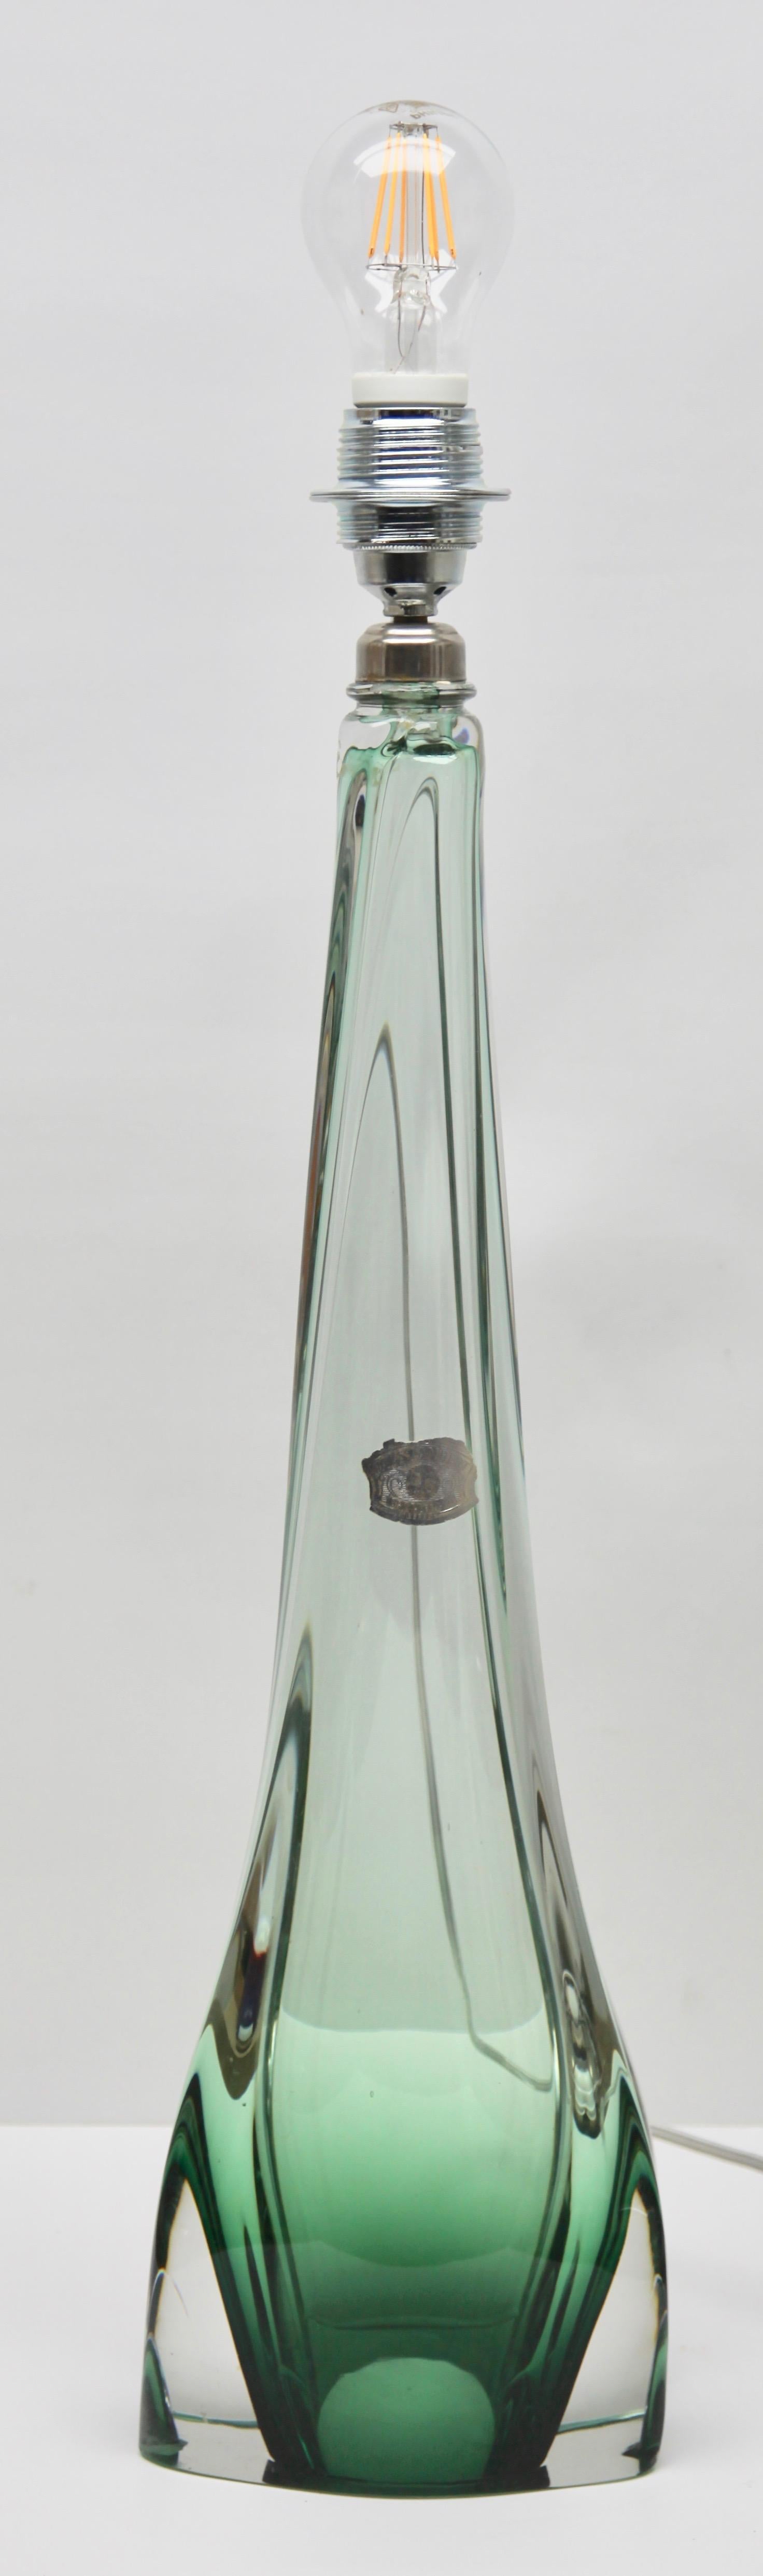 20th Century Val Saint Lambert Large Light' Crystal Glass Table Lamp in Emerald Green